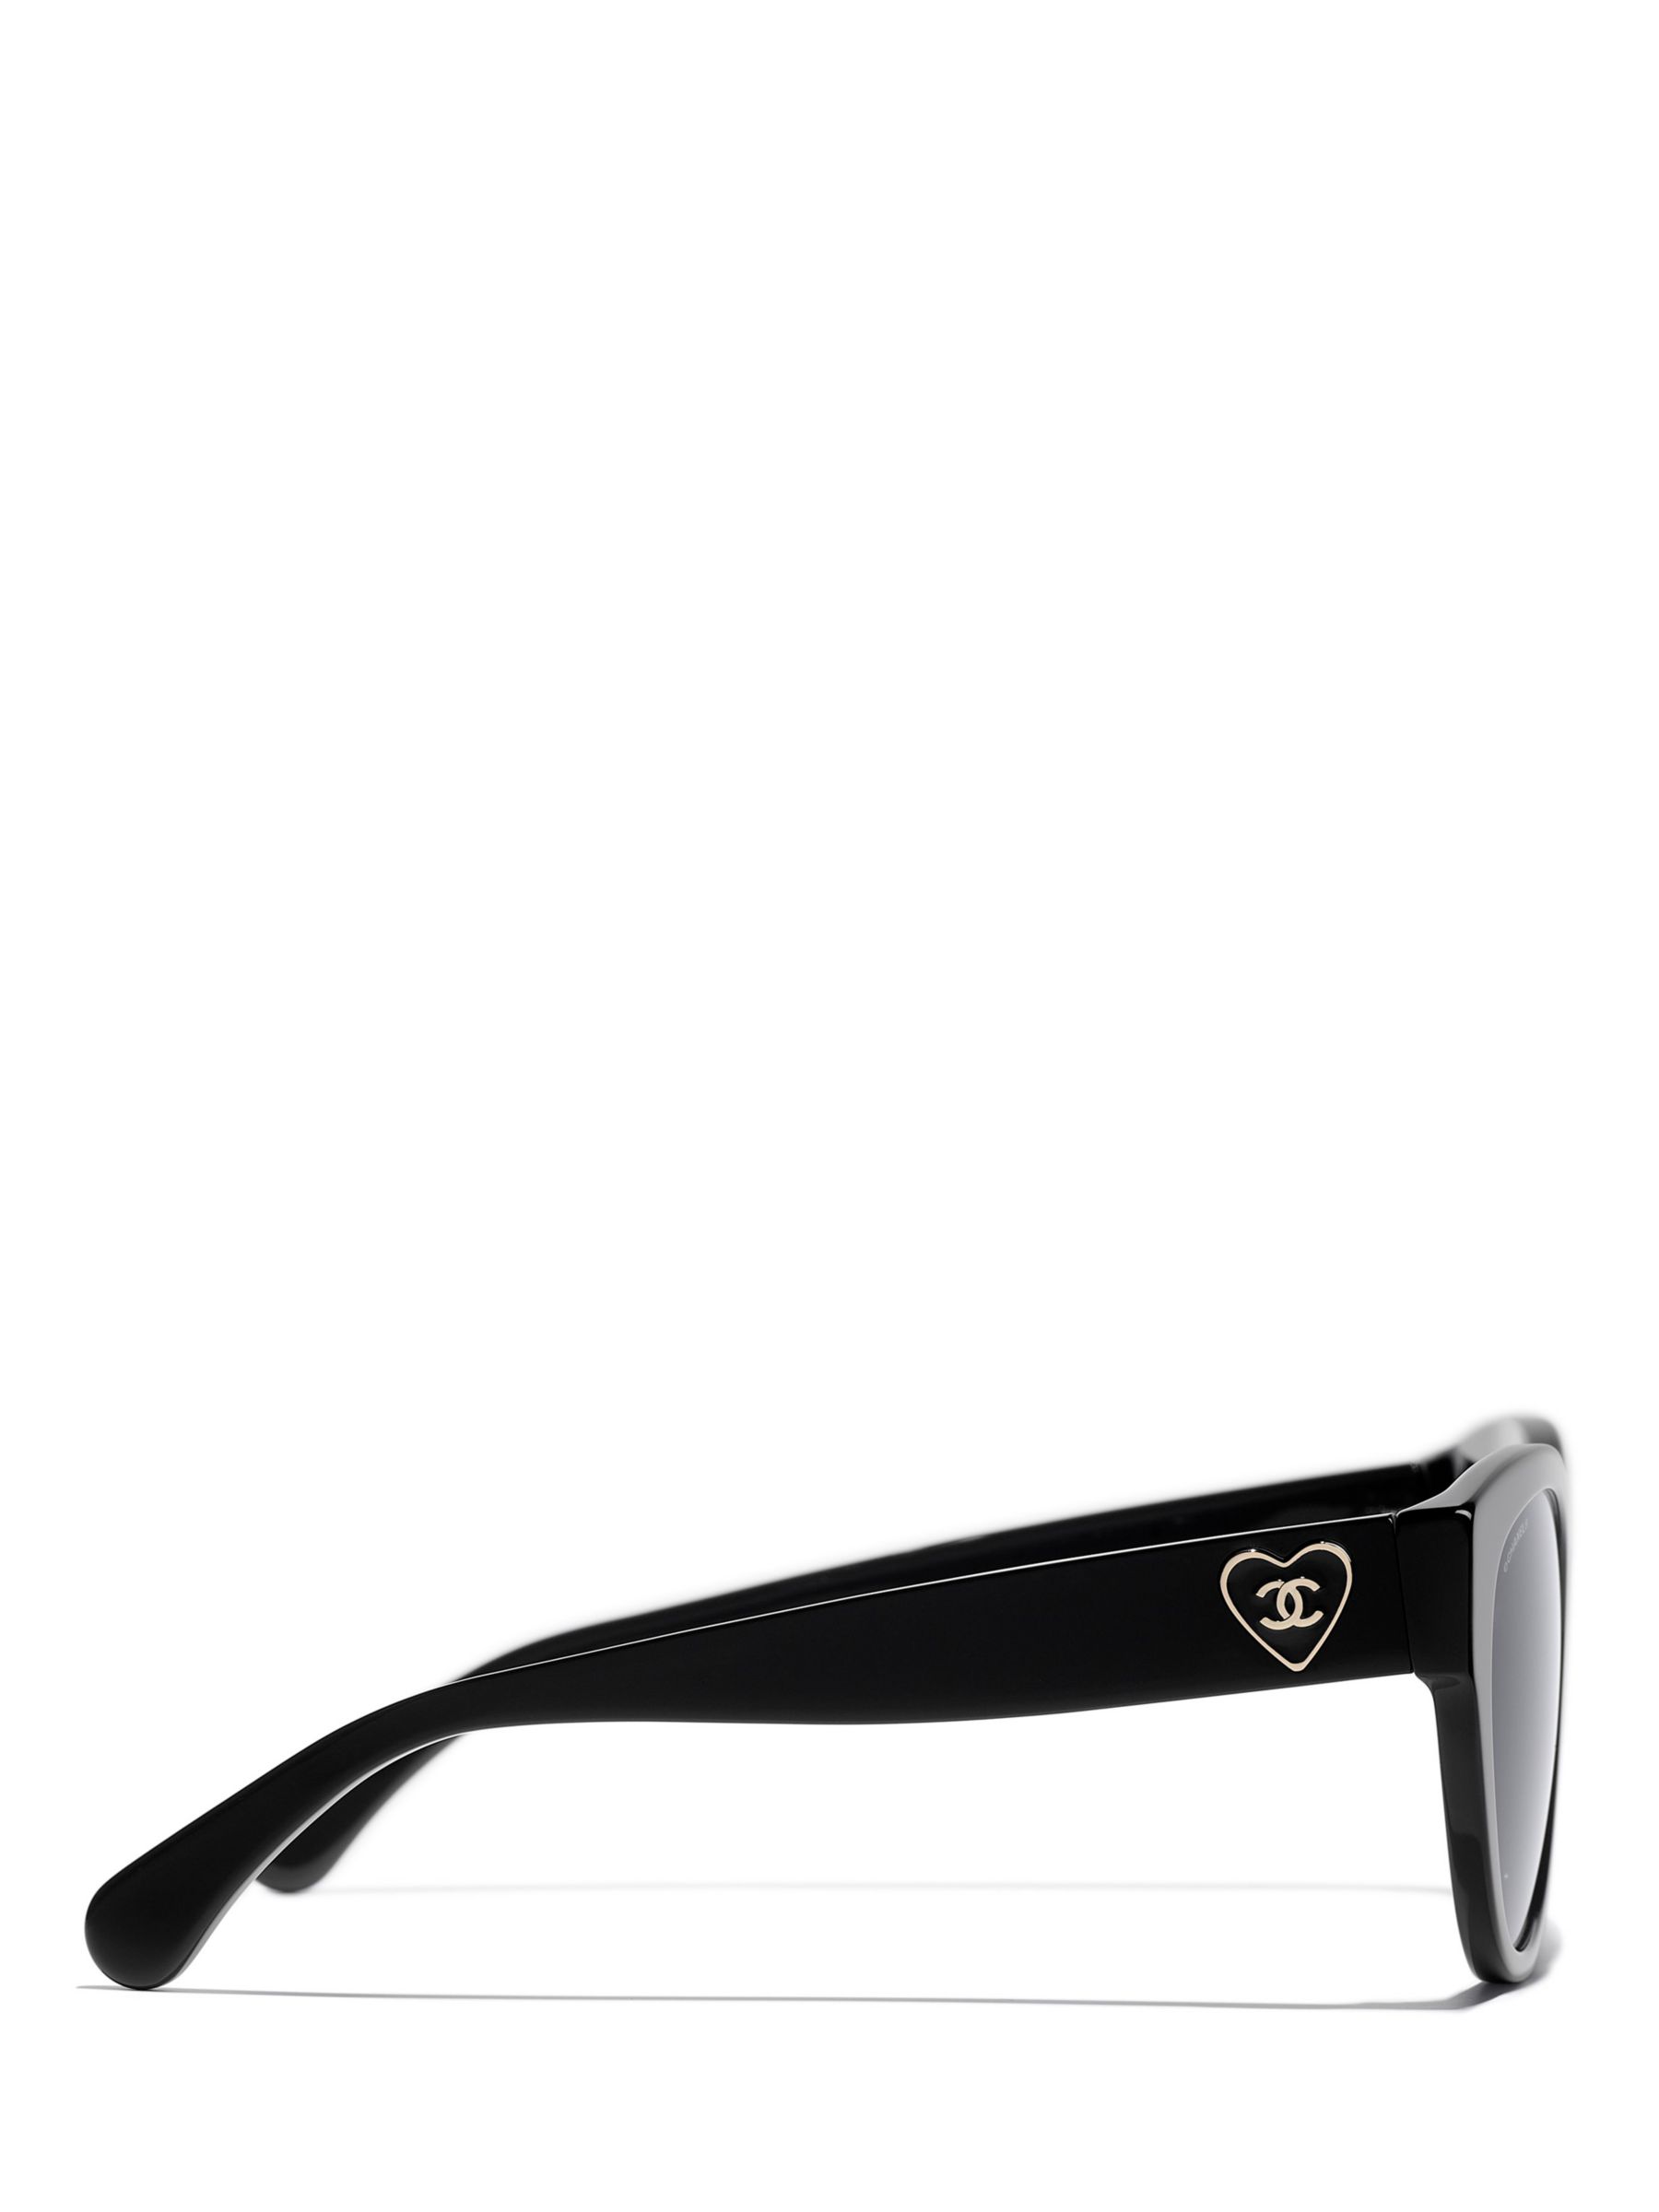 Chanel Black 5284 Oversized Square Sunglasses